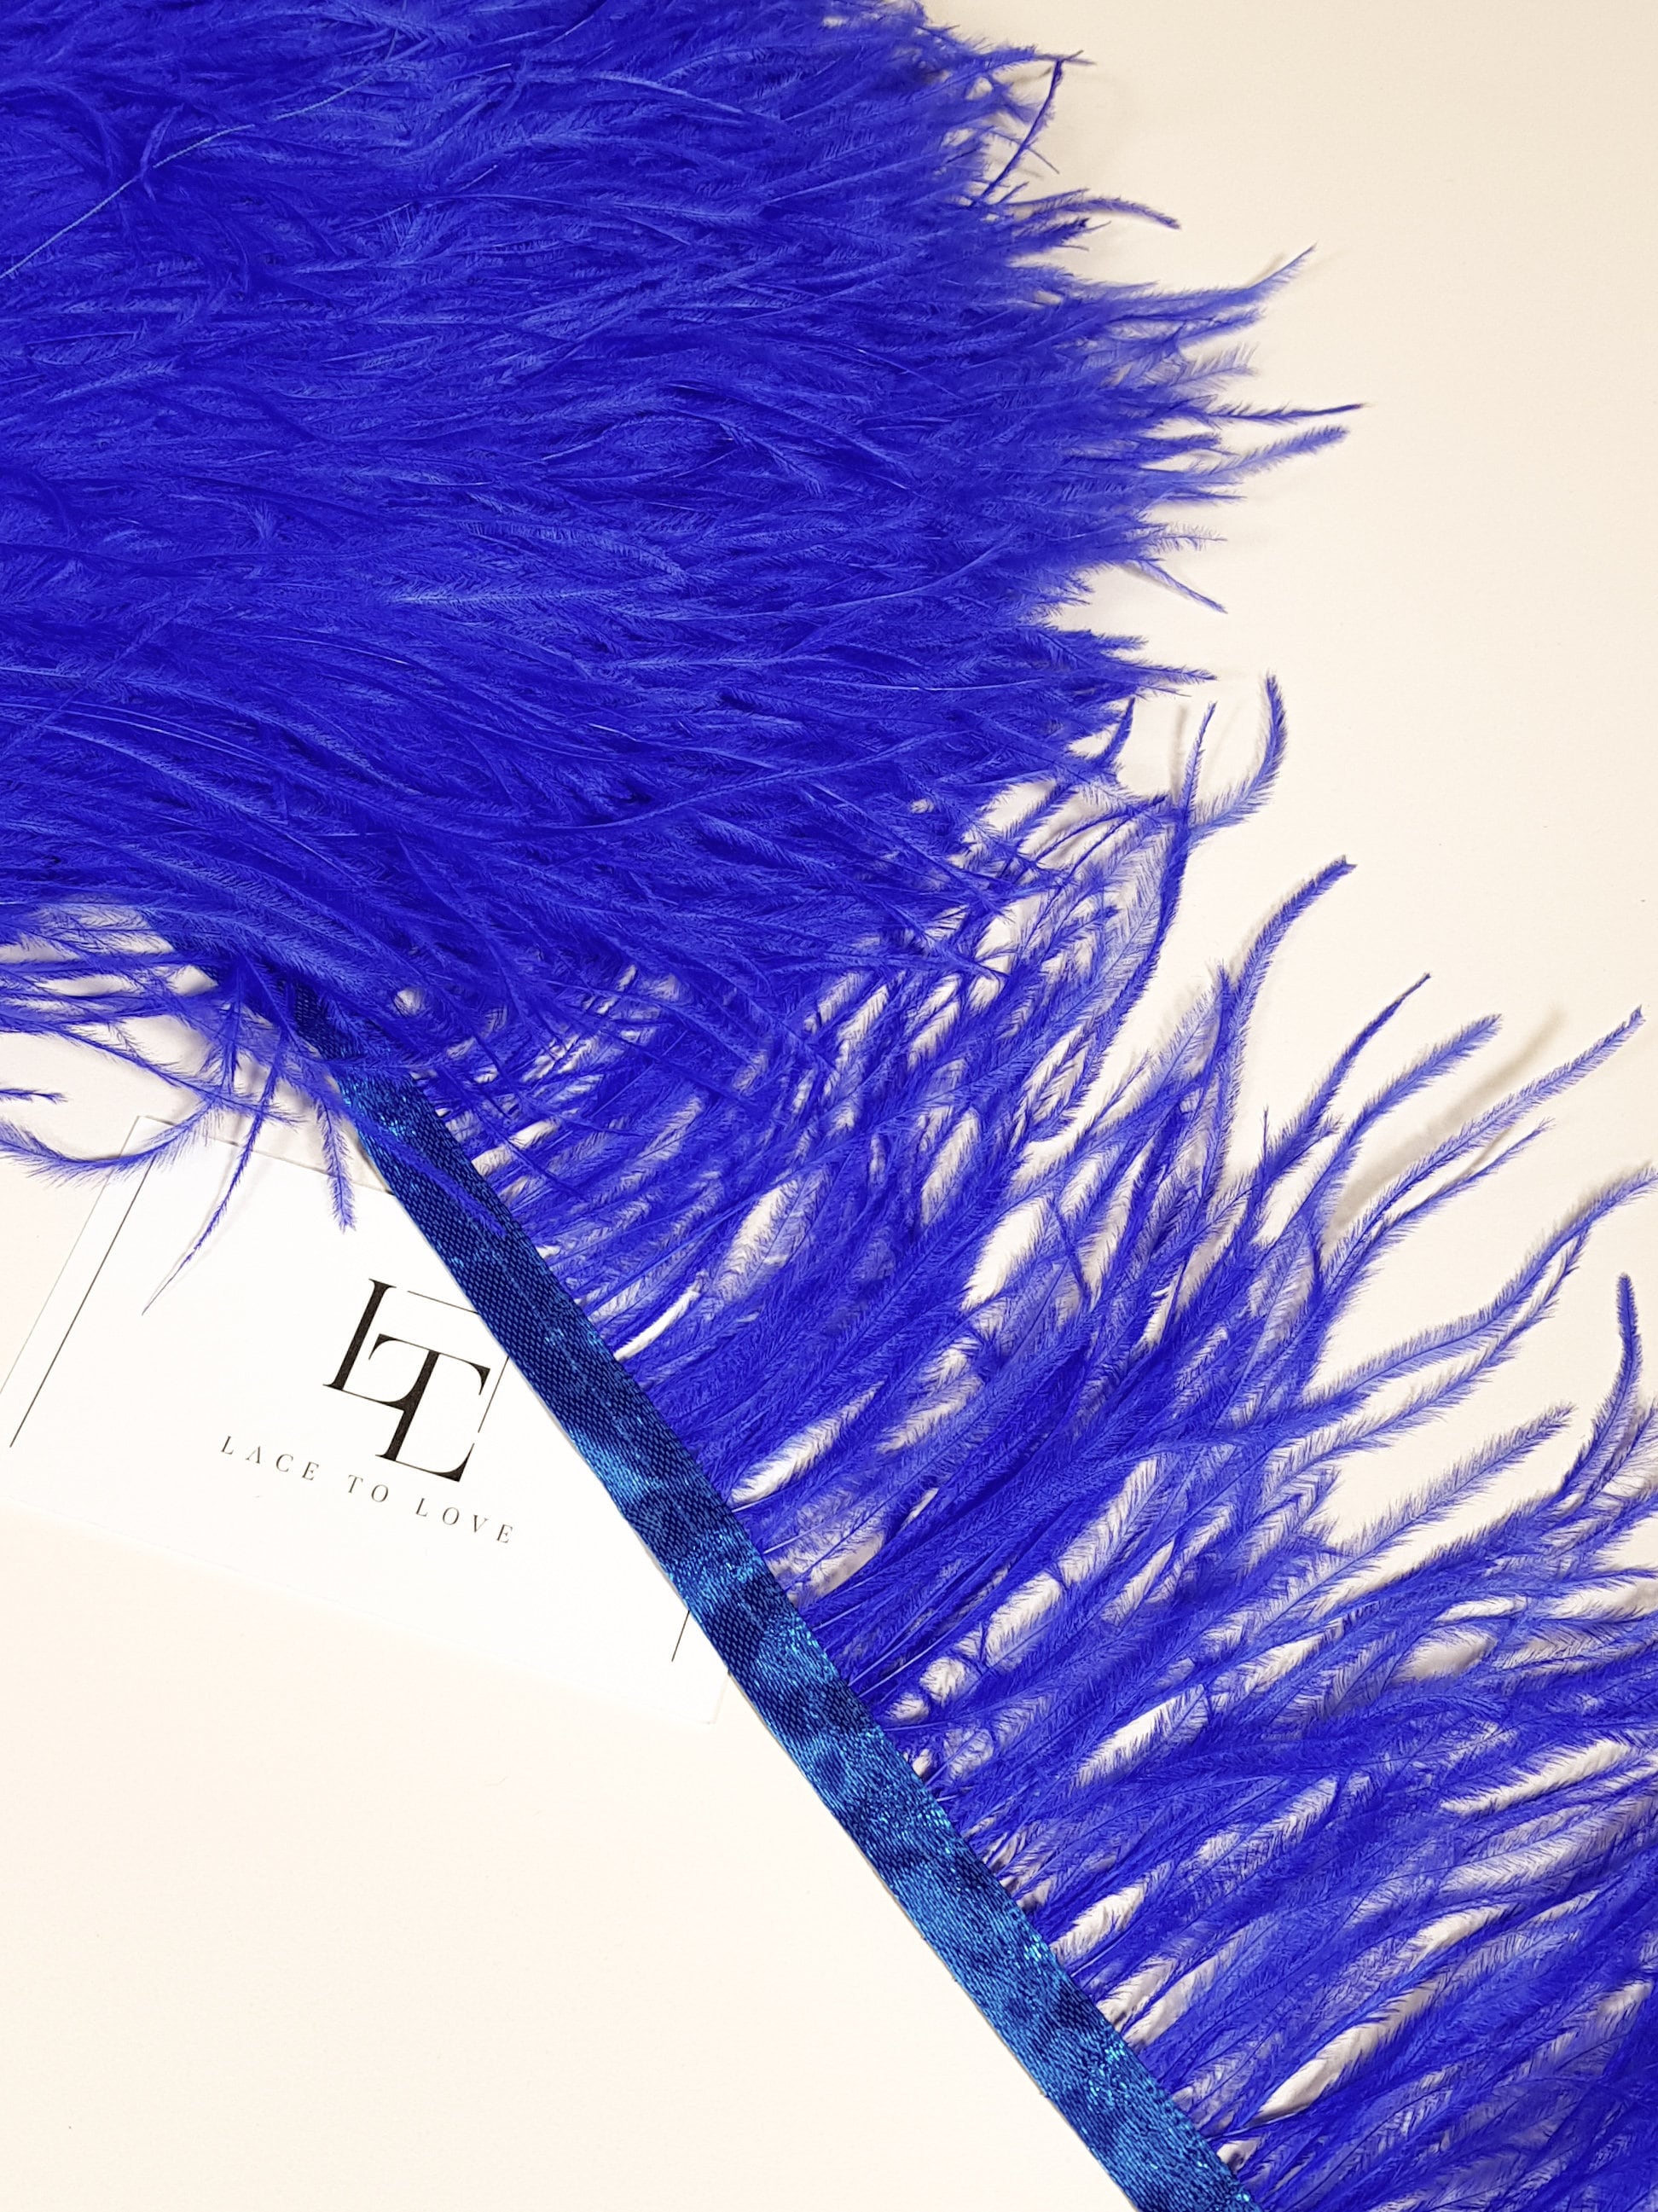 Blue Feathers, 20 Pieces 12-18 Royal Blue Mini Ostrich Spads Chick